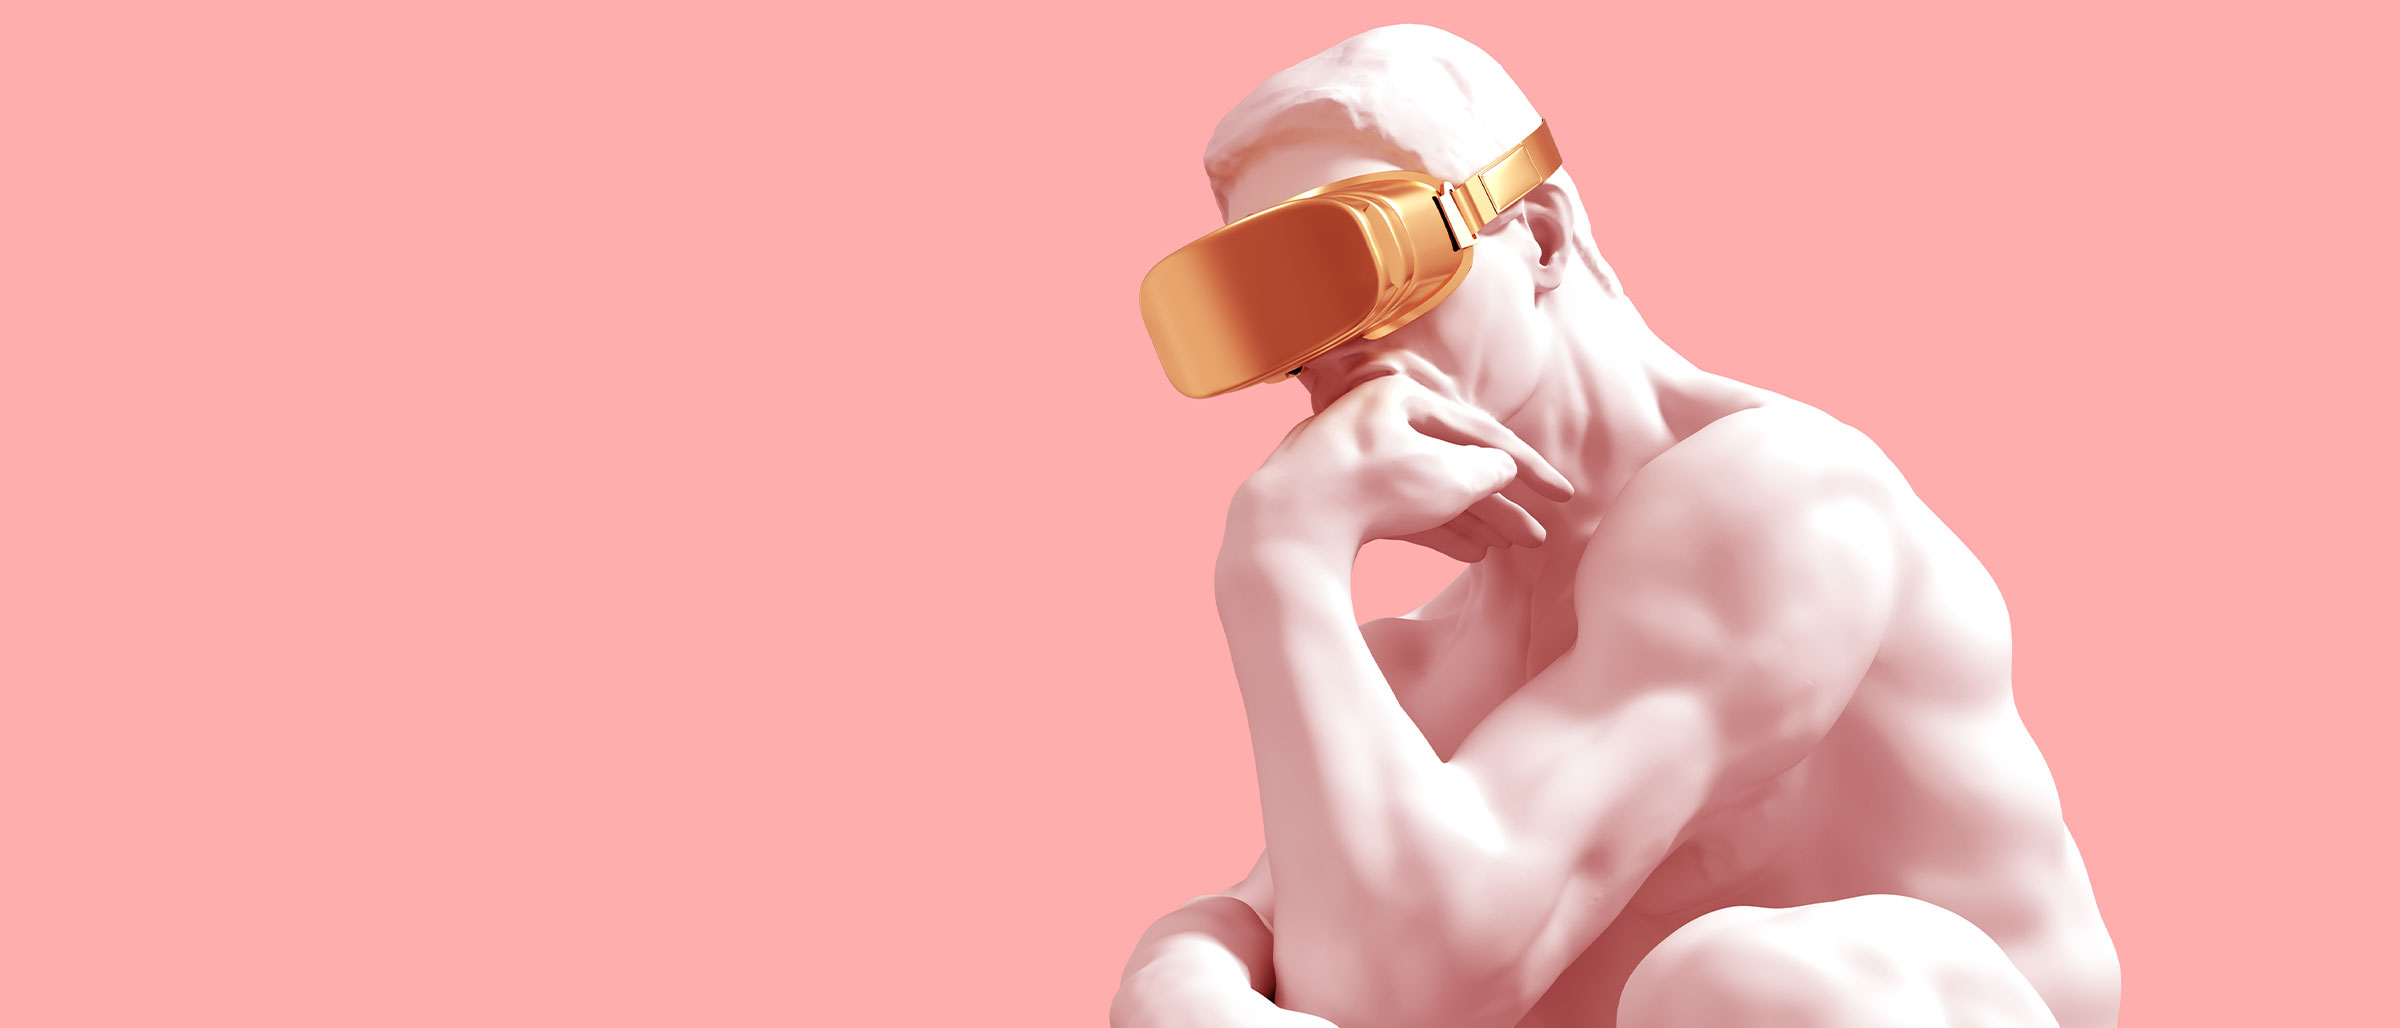 Stone statue of a man wearing a virtual reality headset